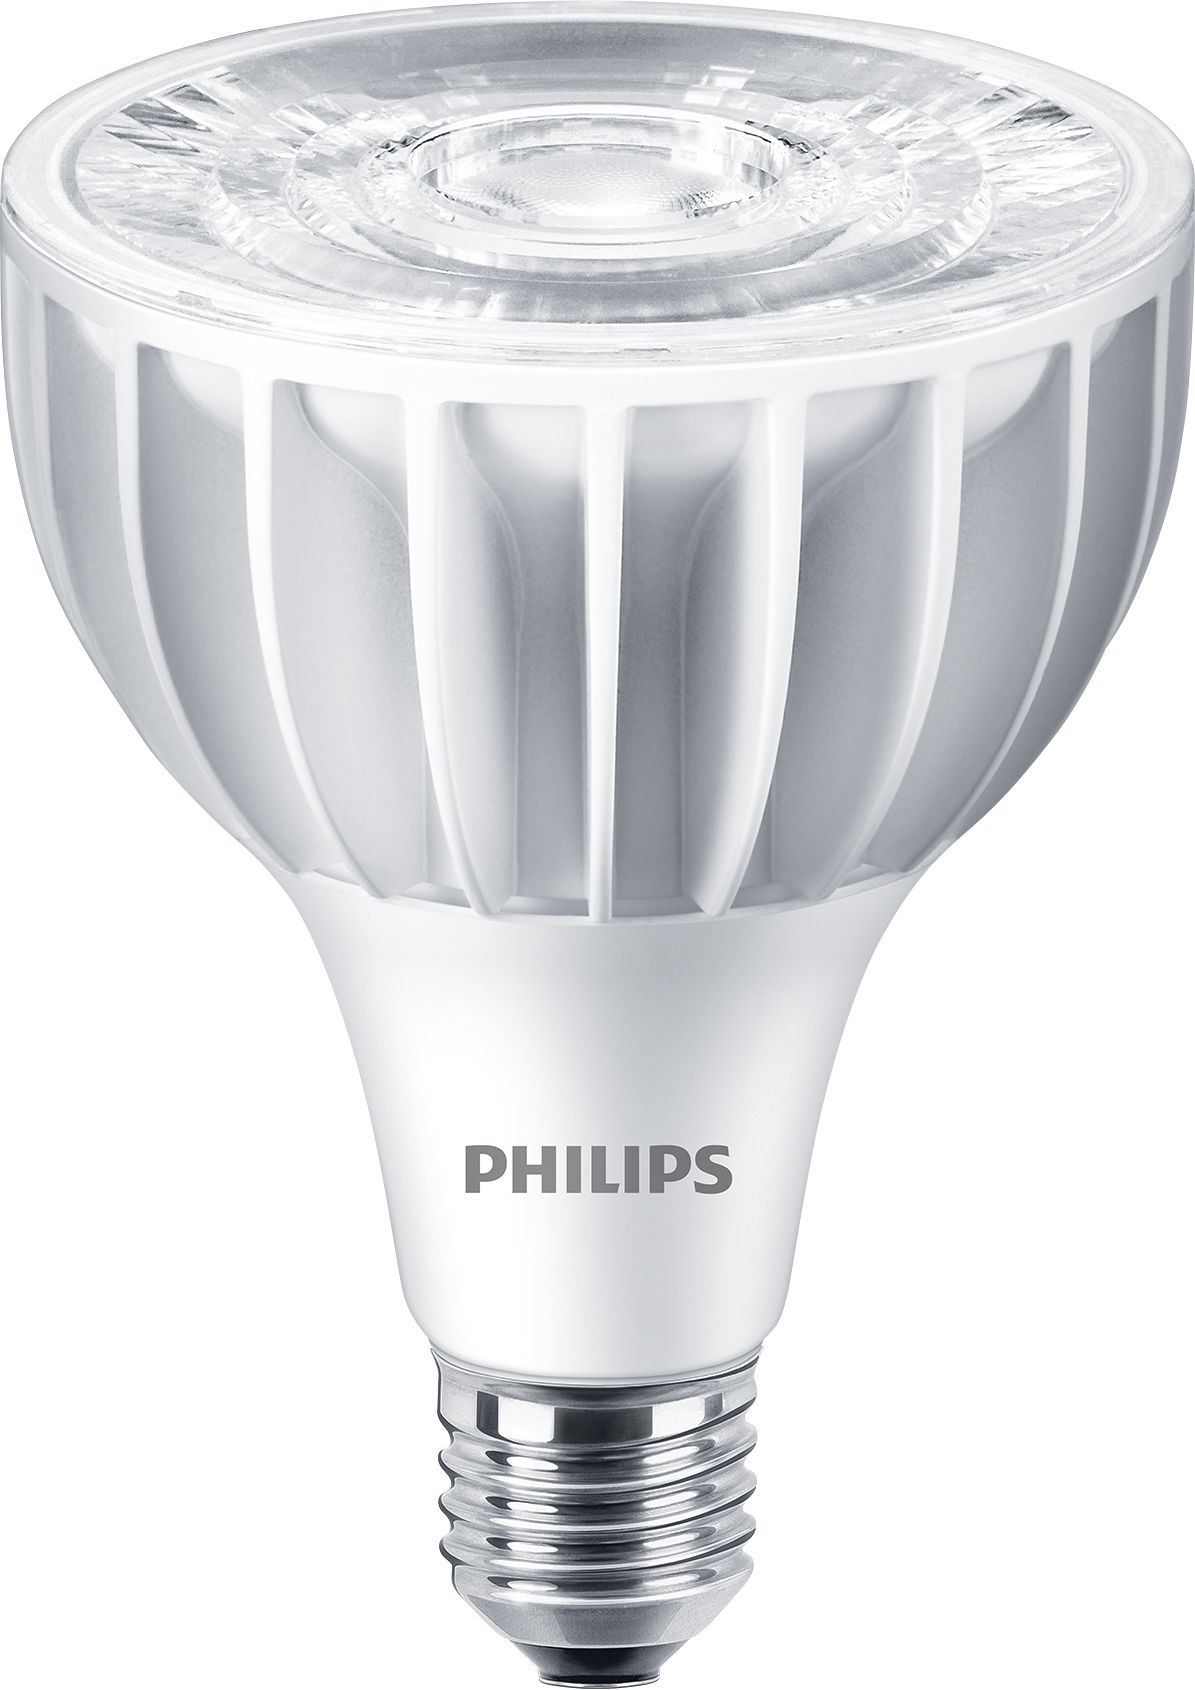 Master LED PAR30L 30D 840 | 929001354108 | Philips lighting